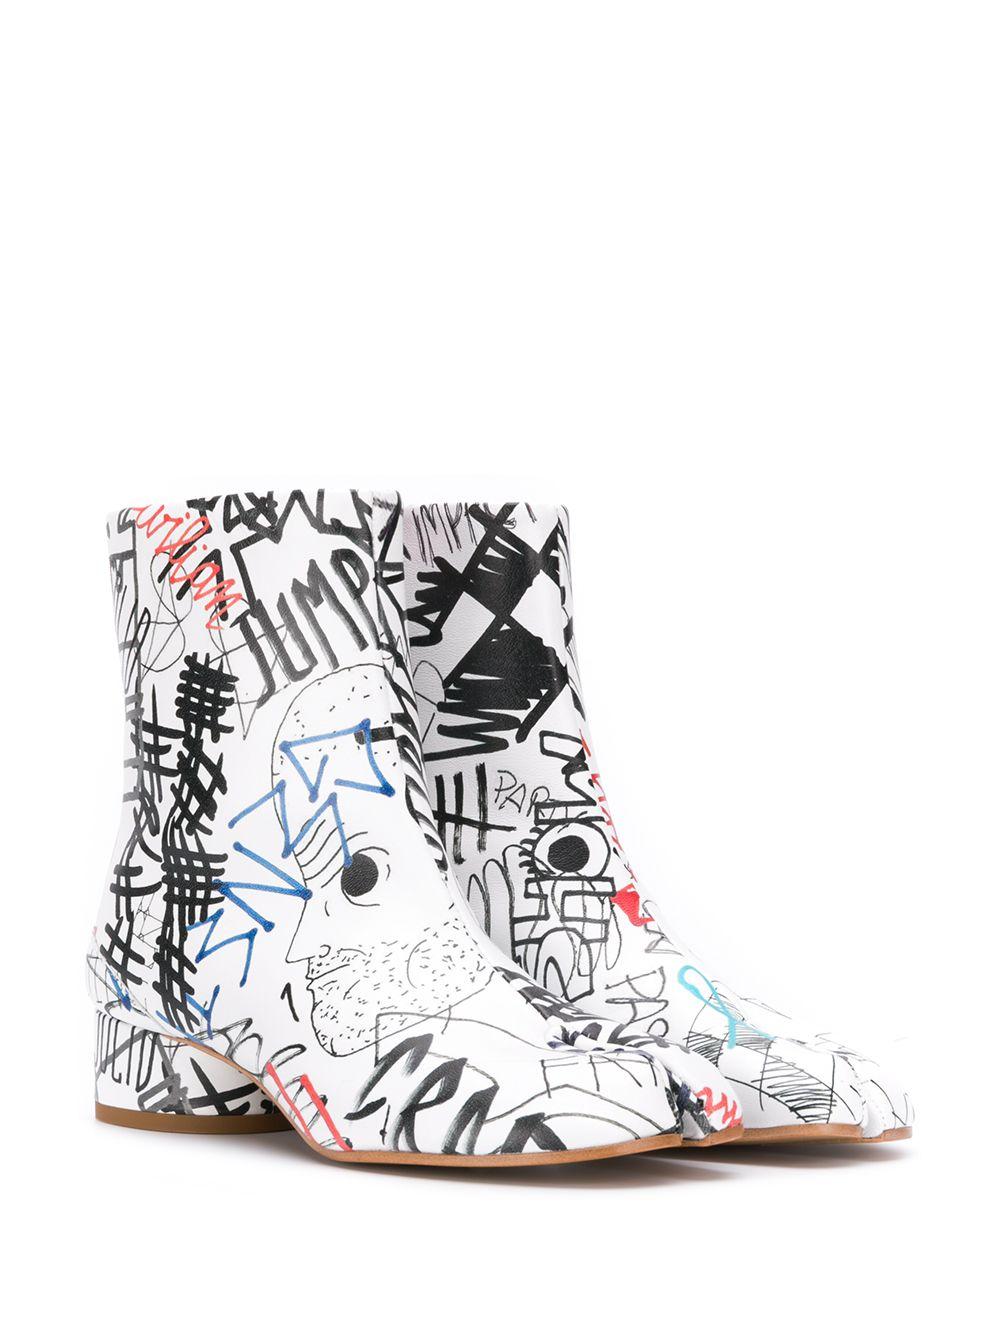 Maison Margiela Leather Tabi Graffiti-print Boots in White - Lyst